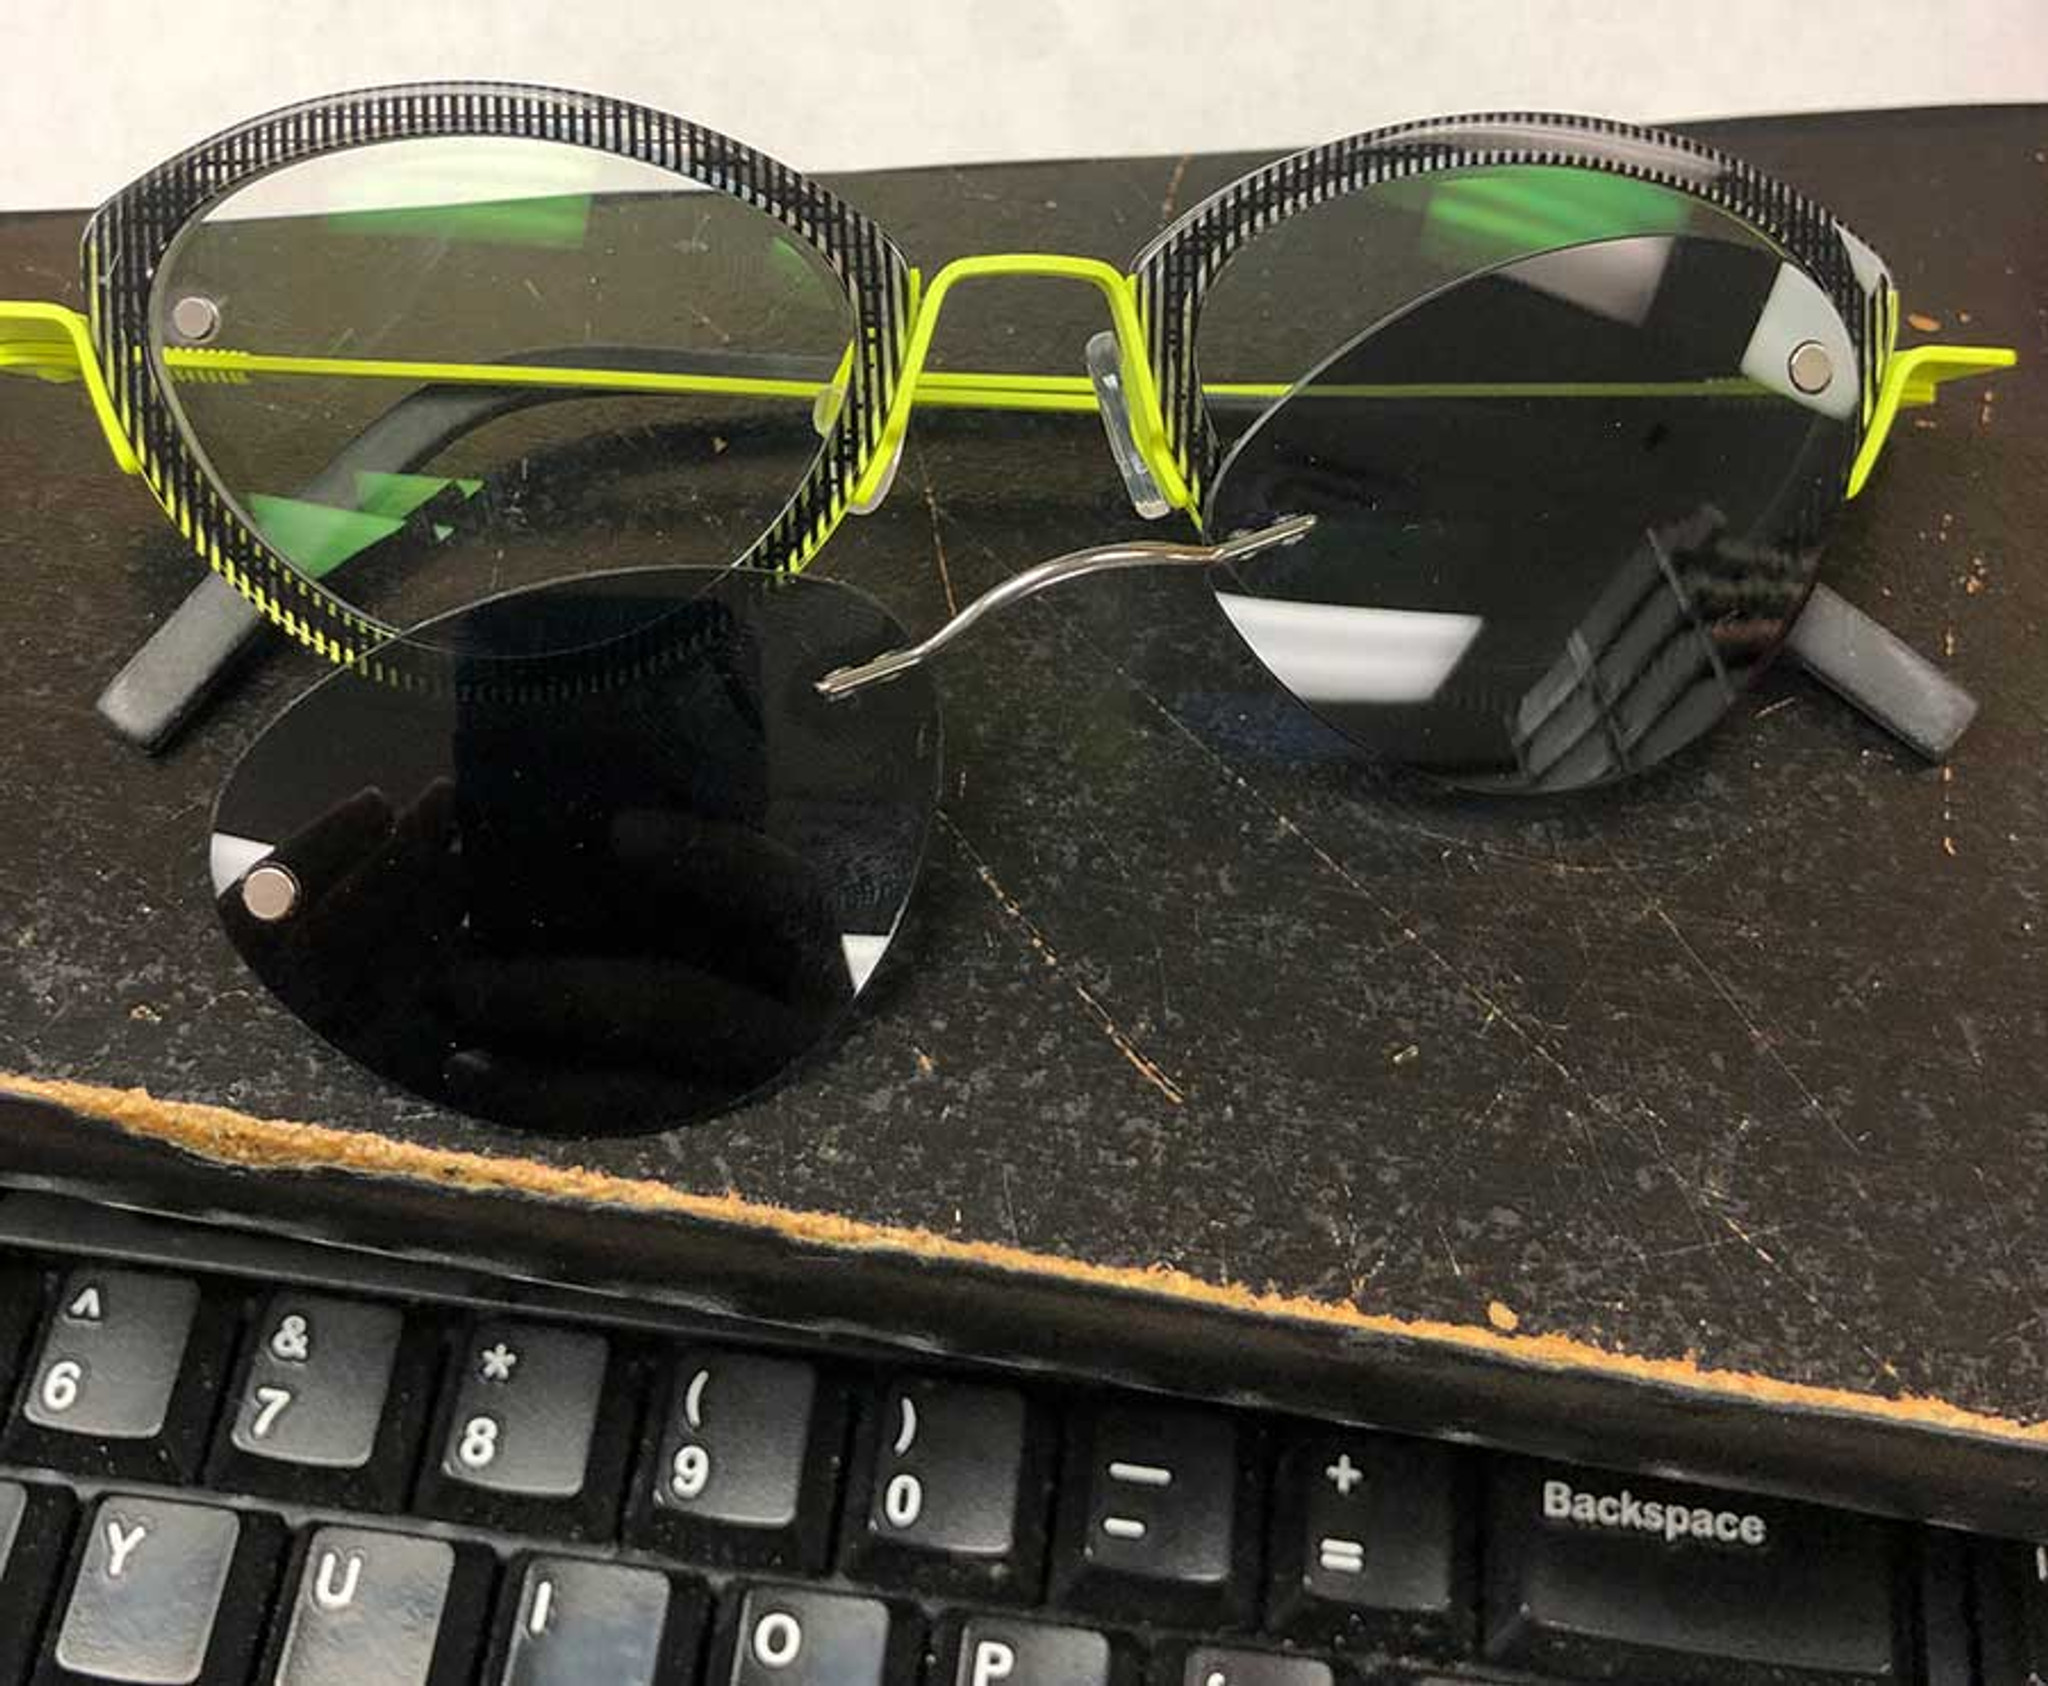 Clip-On Sunglasses for My Eyeglasses